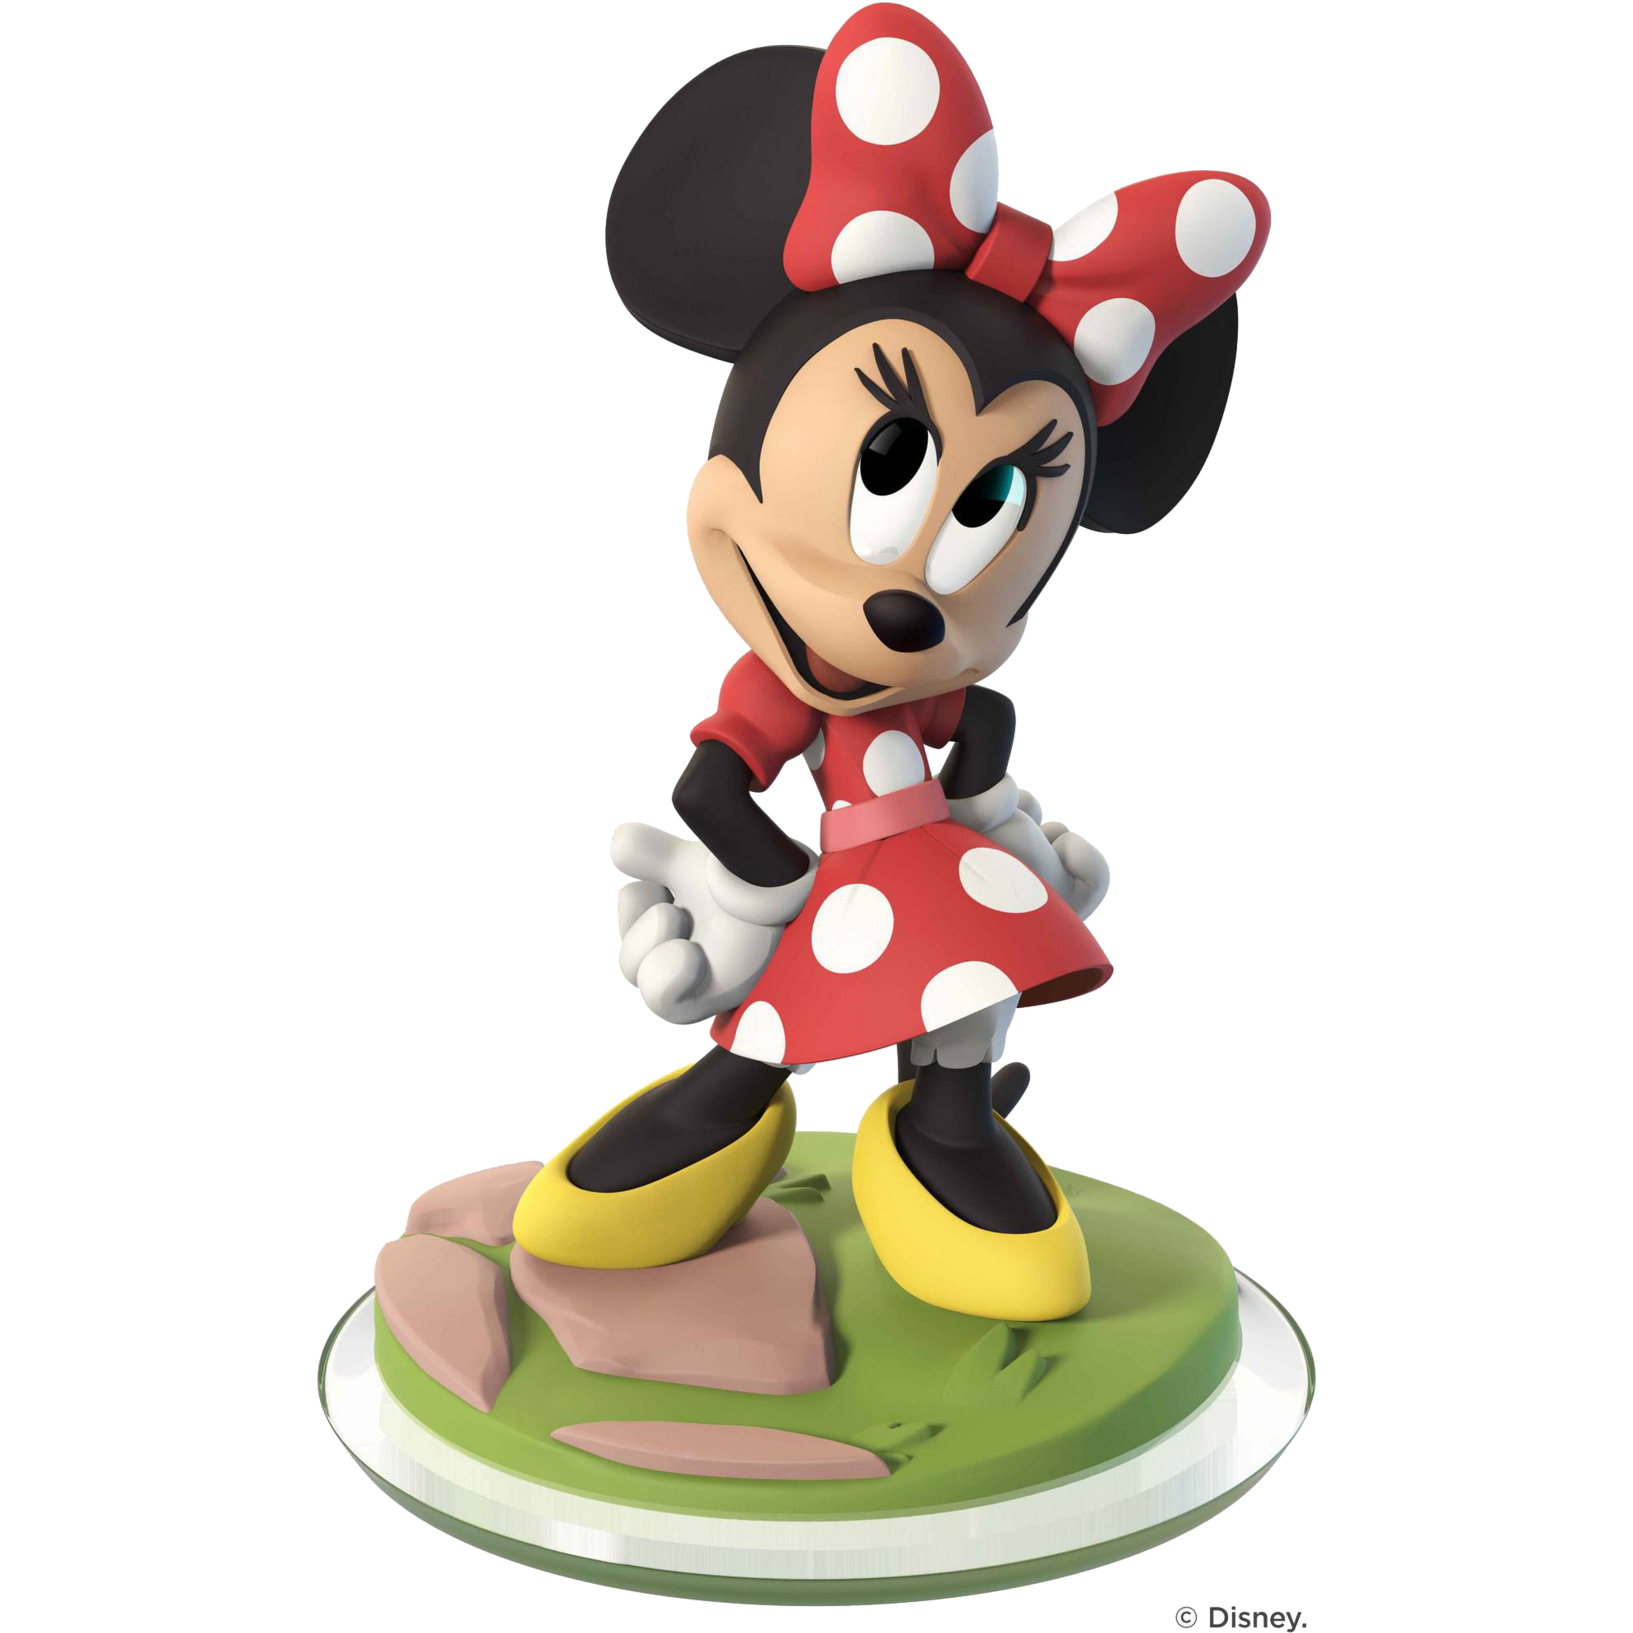 Disney Infinity 3.0 - Minnie Mouse Figure